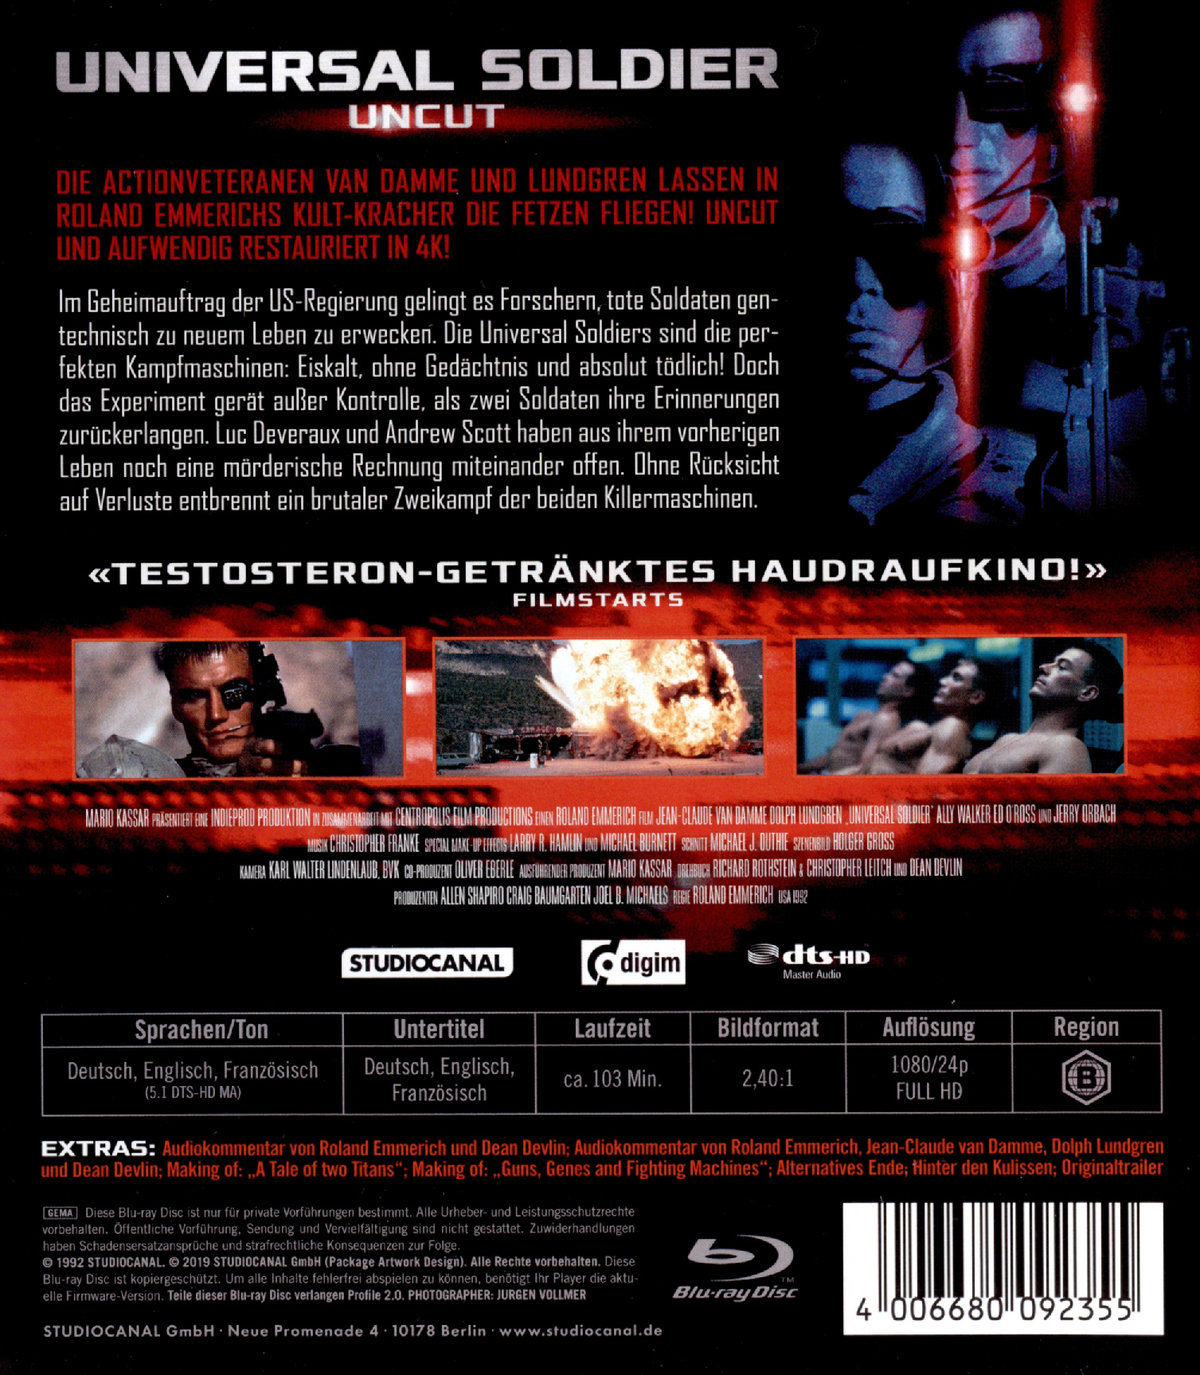 Universal Soldier - Uncut Edition (blu-ray)